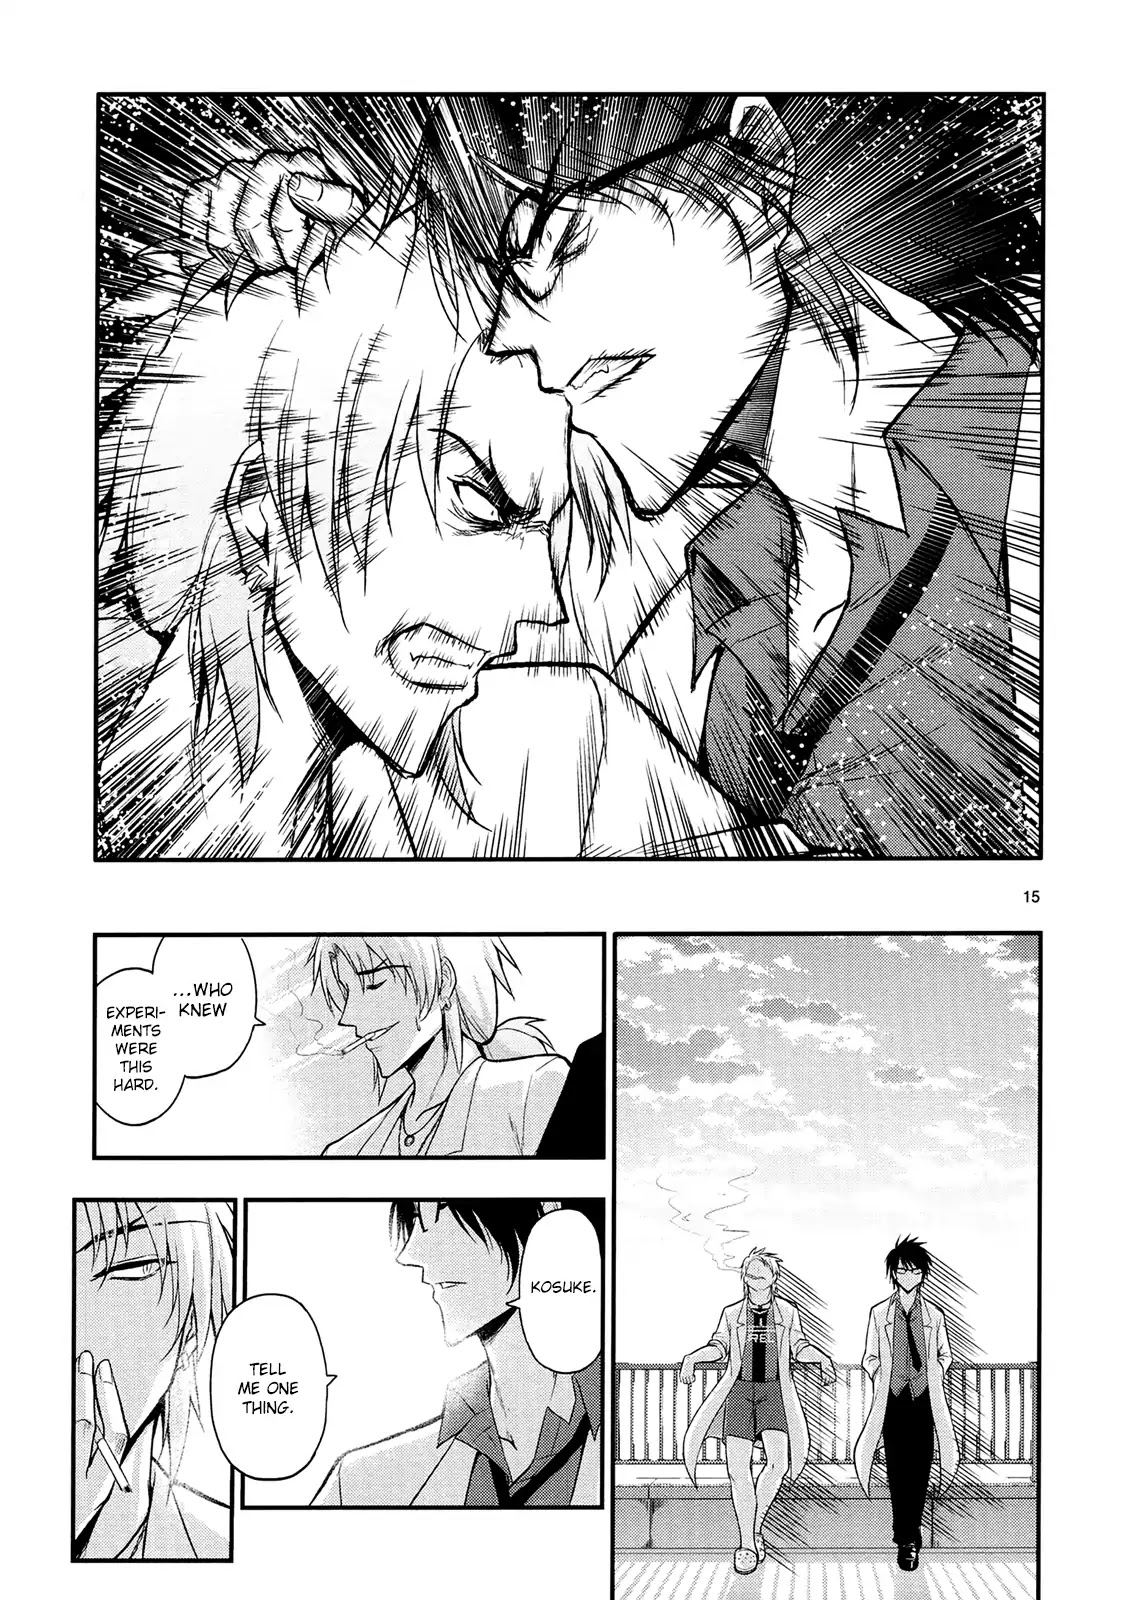 Rike ga Koi ni Ochita no de Shoumeishitemita Chapter 16: Proof 16: STEM students fell in love, so they tried to kissing everyone.